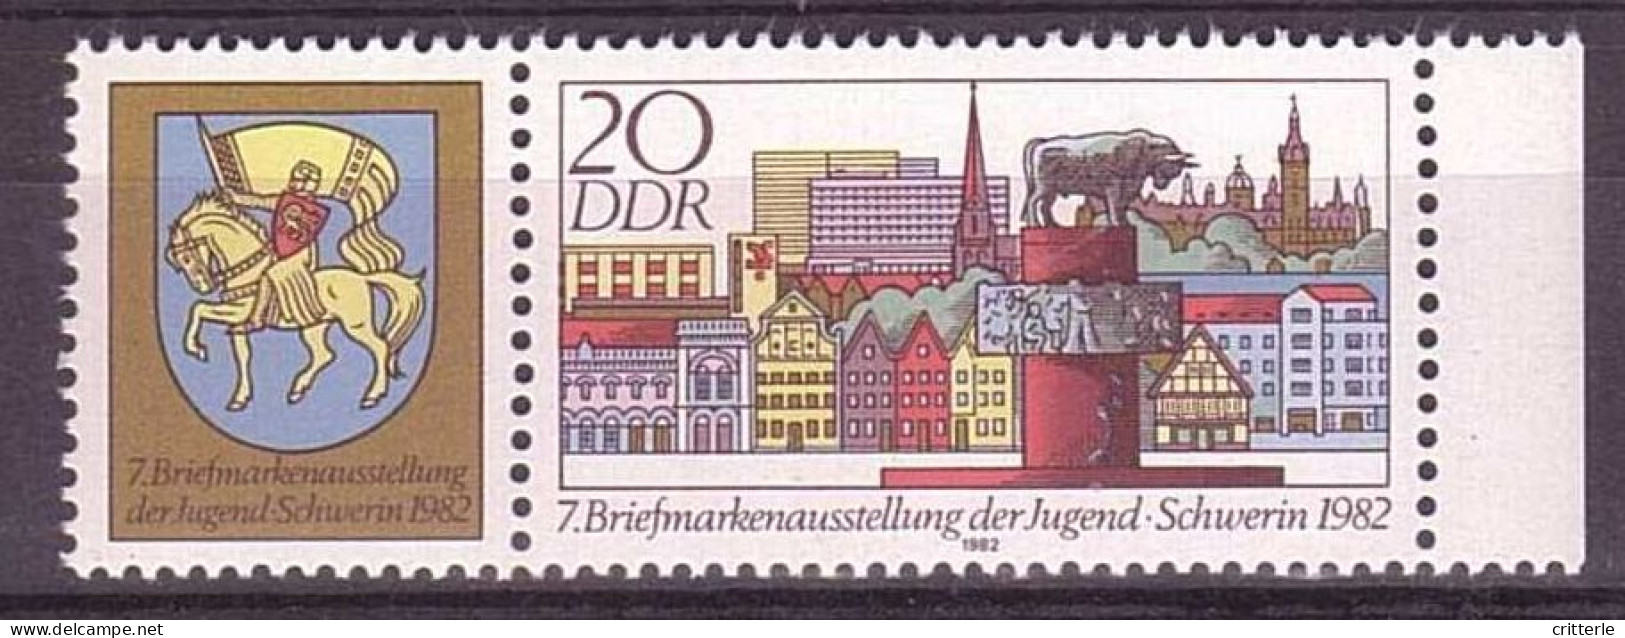 DDR W ZD 542 Postfrisch (2) - Se-Tenant